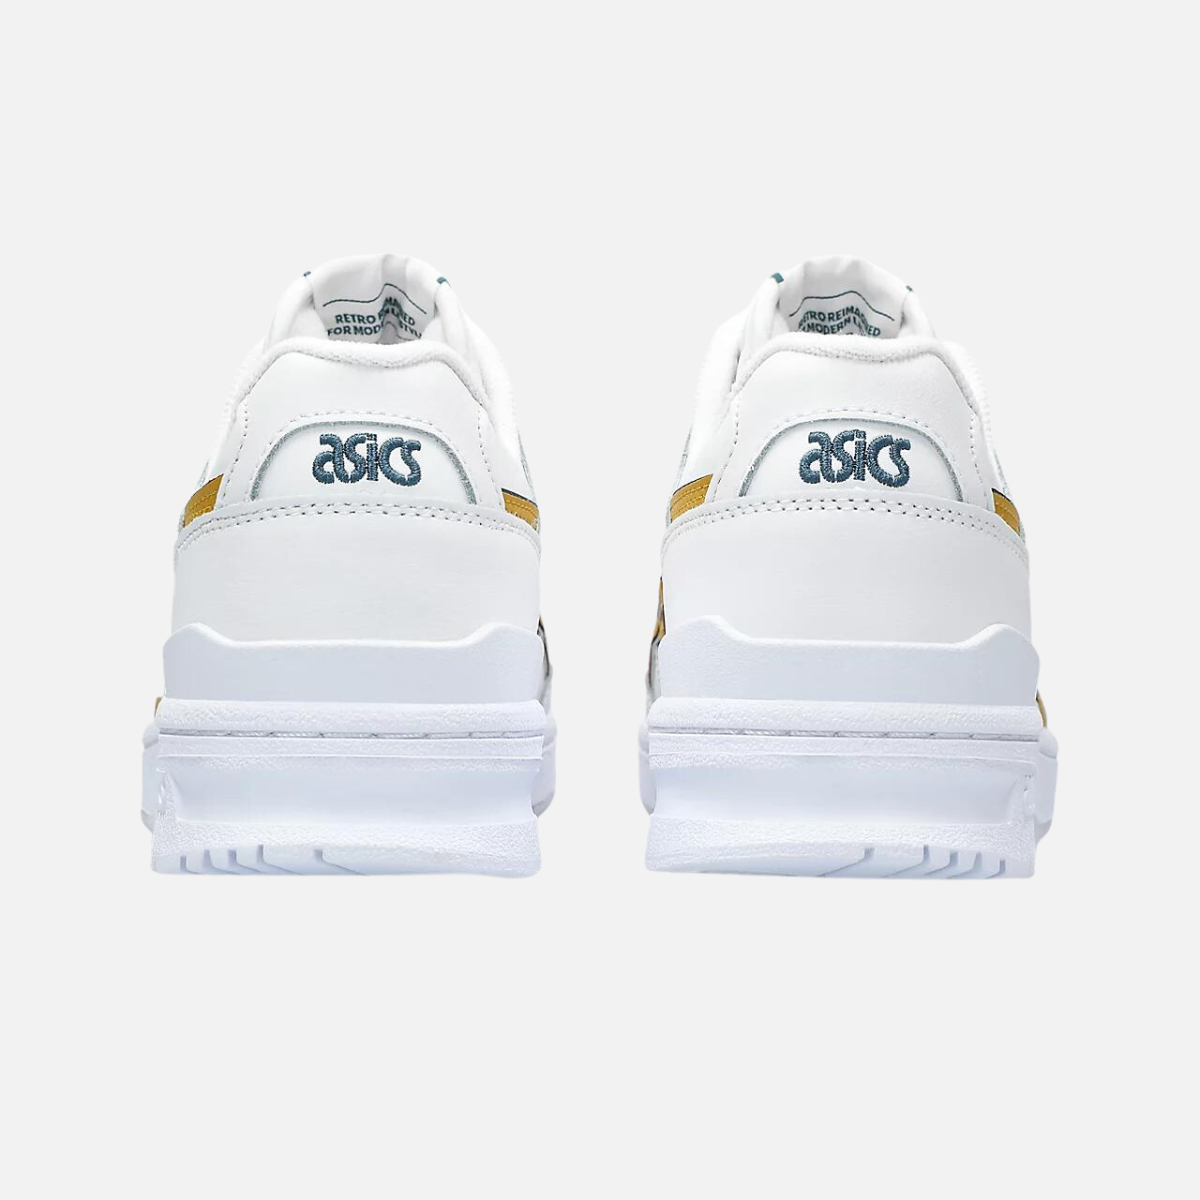 Asics EX89 Men's Basketball Shoes -White/Mustard Seed